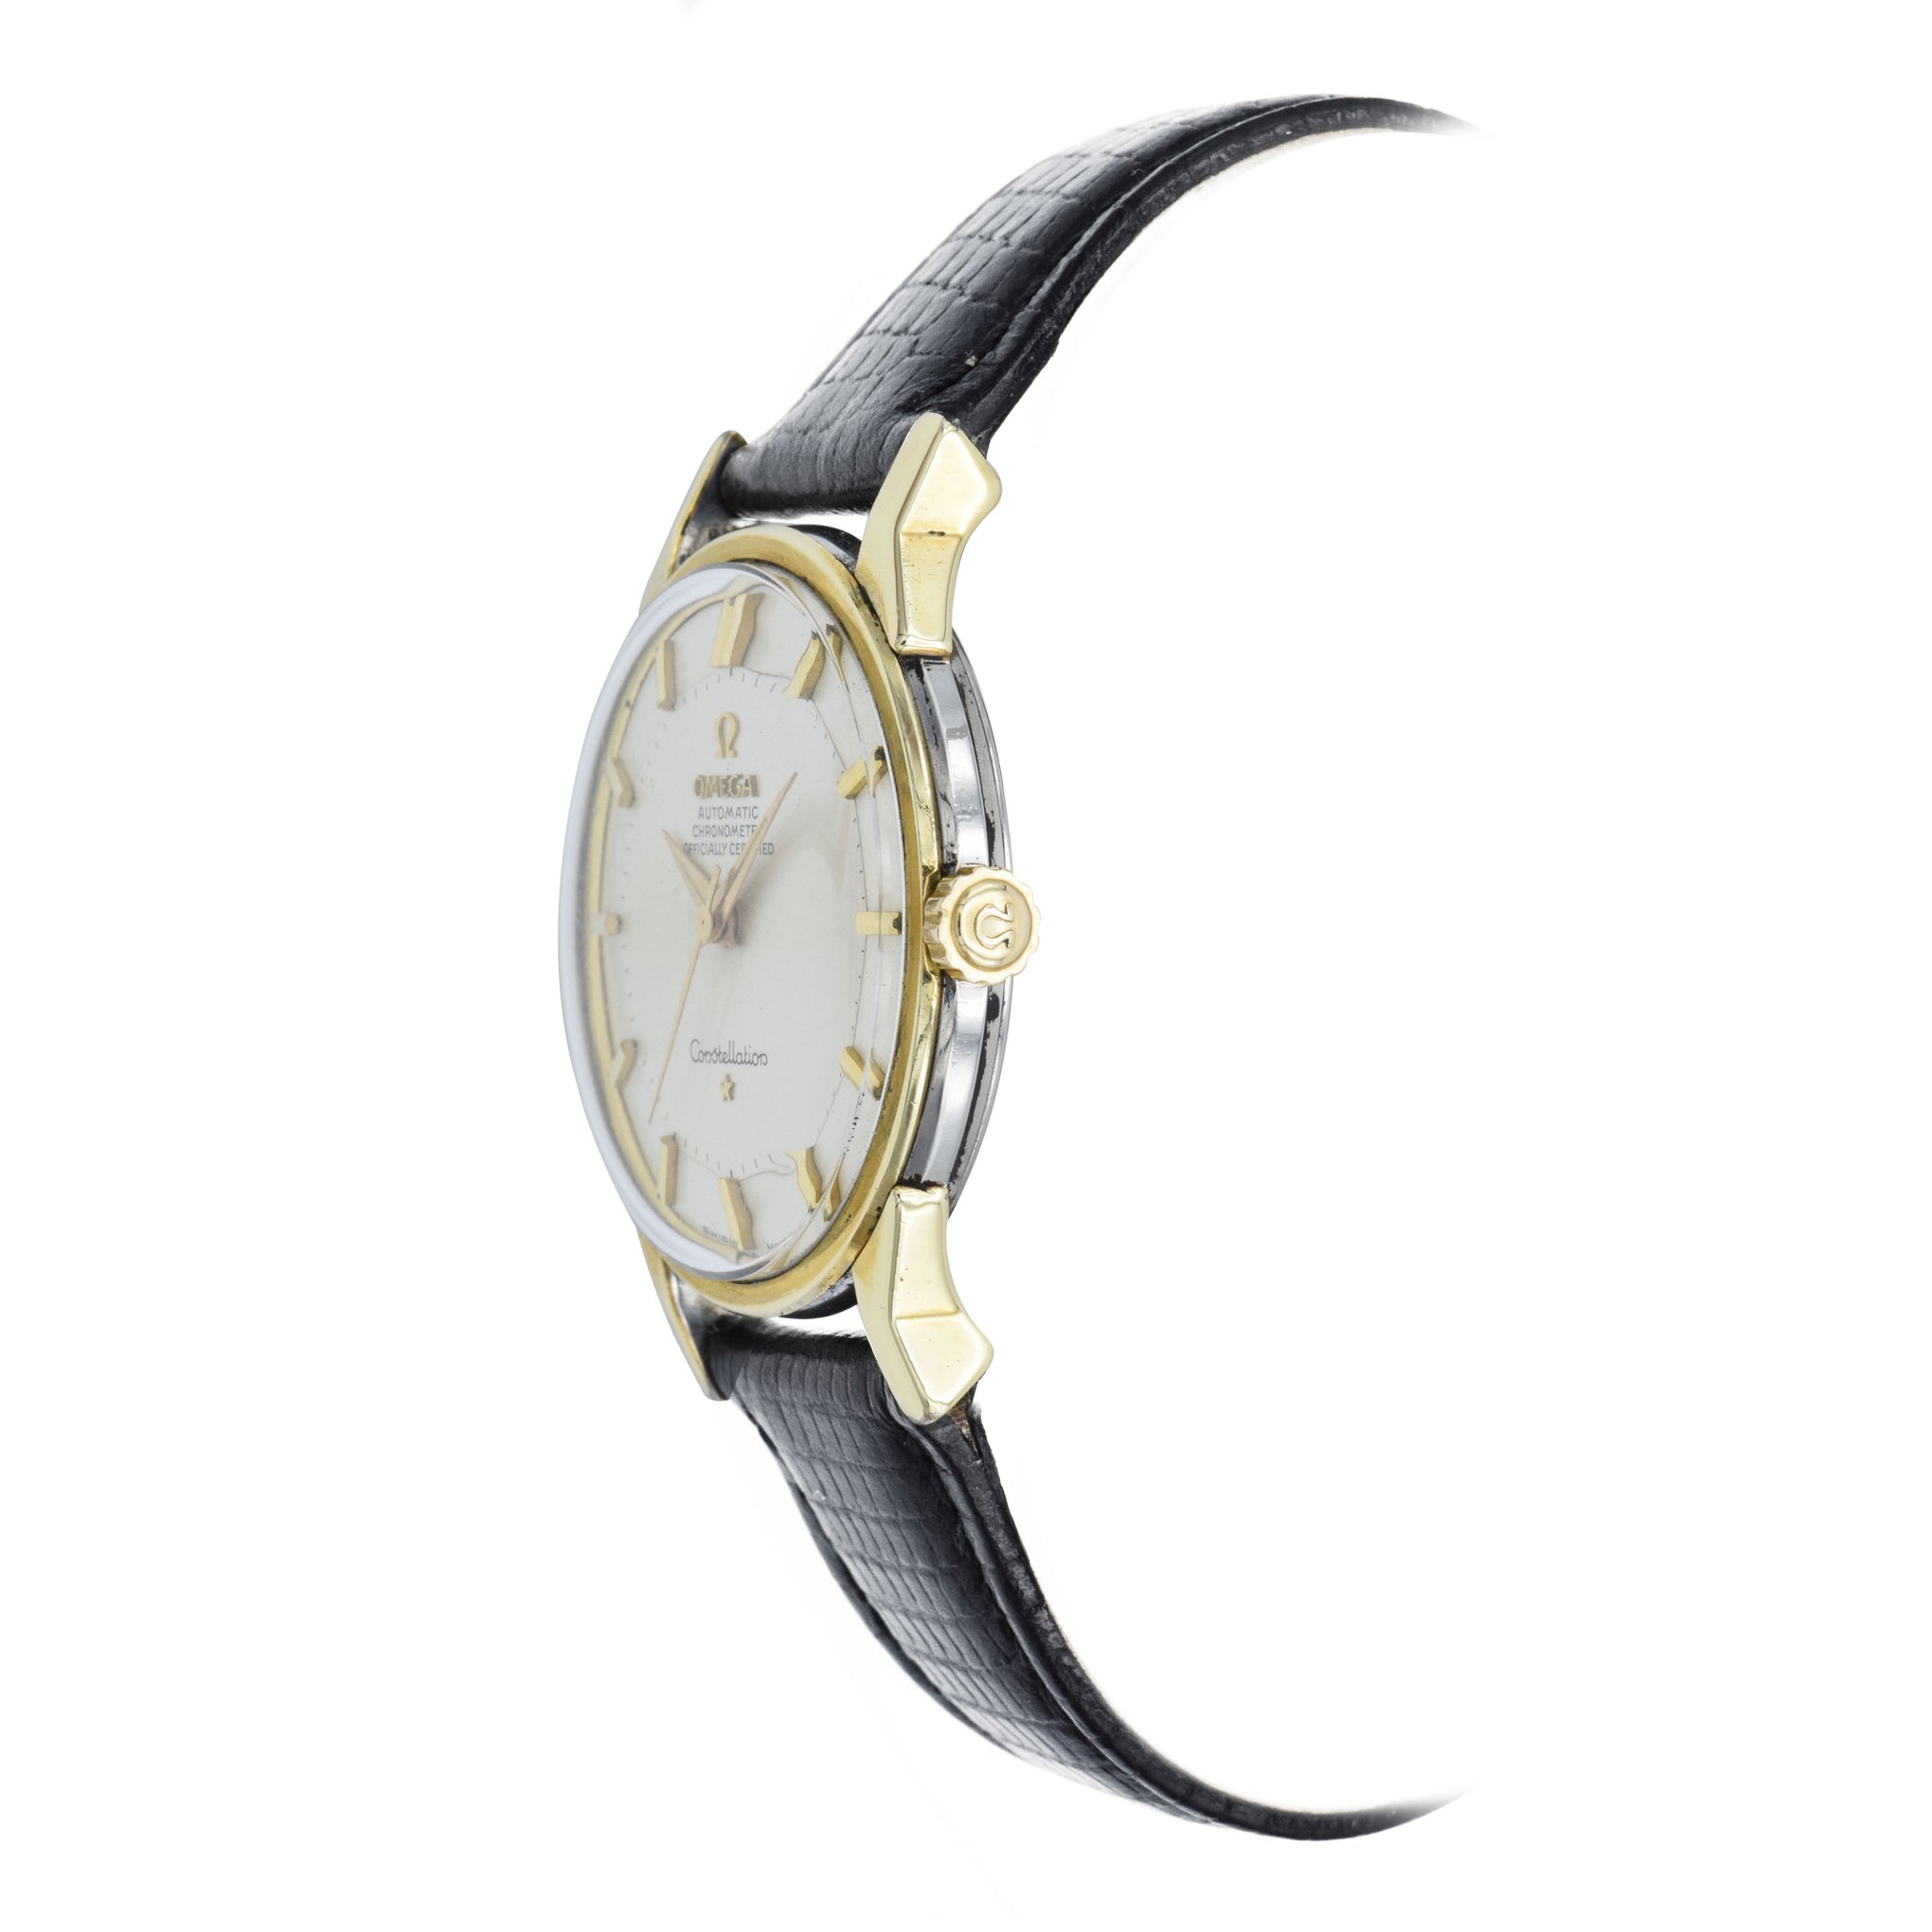 Vintage 1960s Omega Constellation Watch